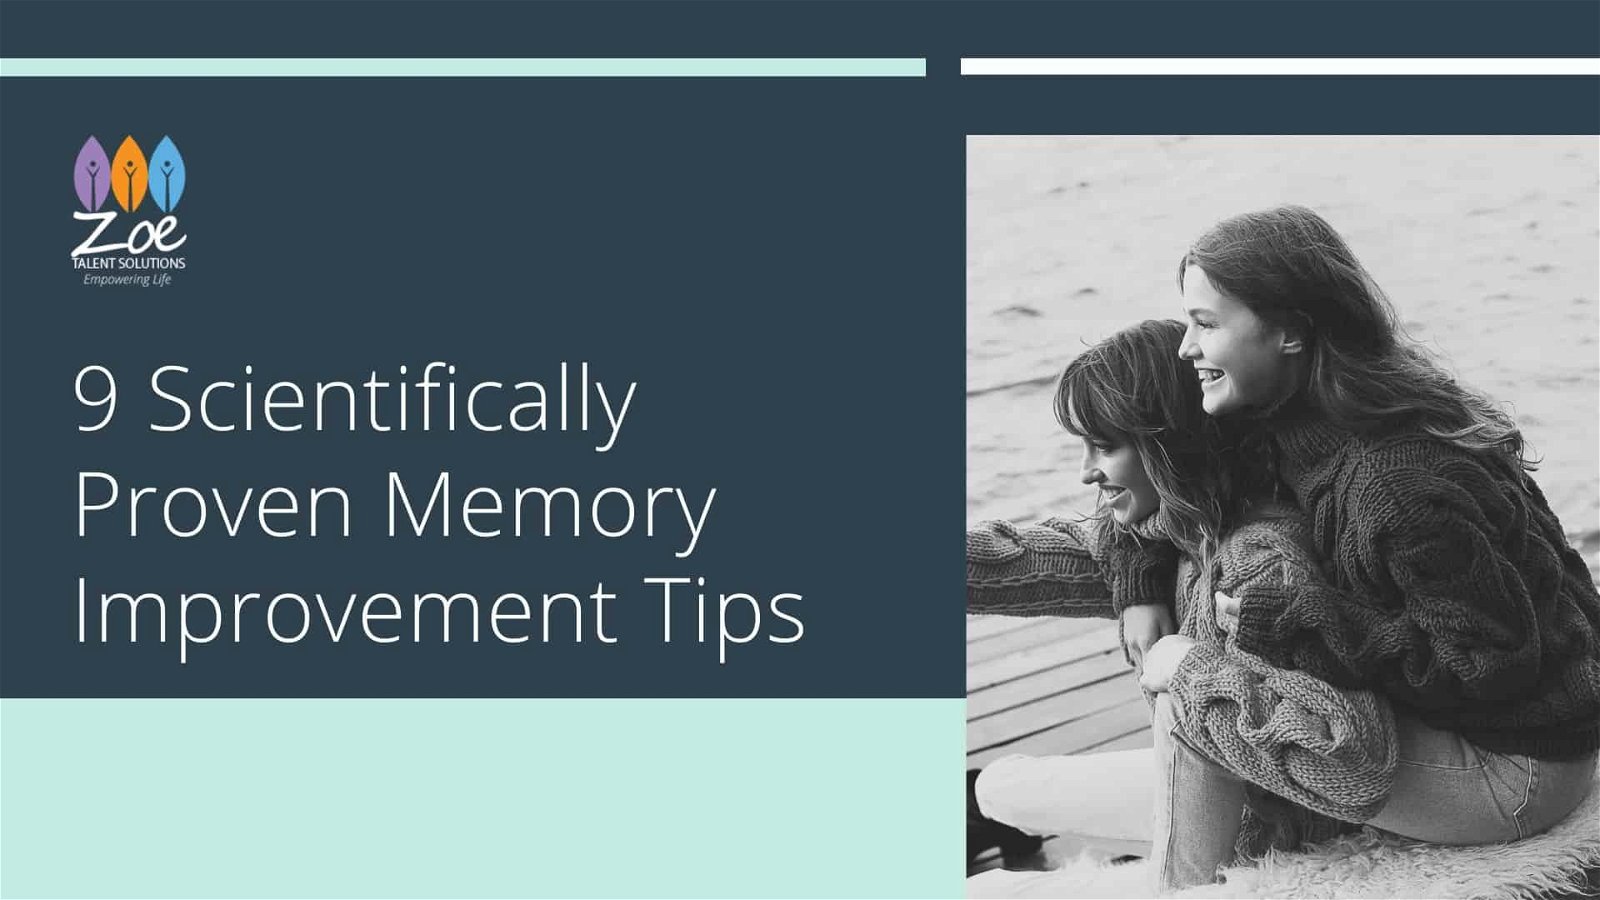 9 Scientifically Proven Memory Improvement Tips